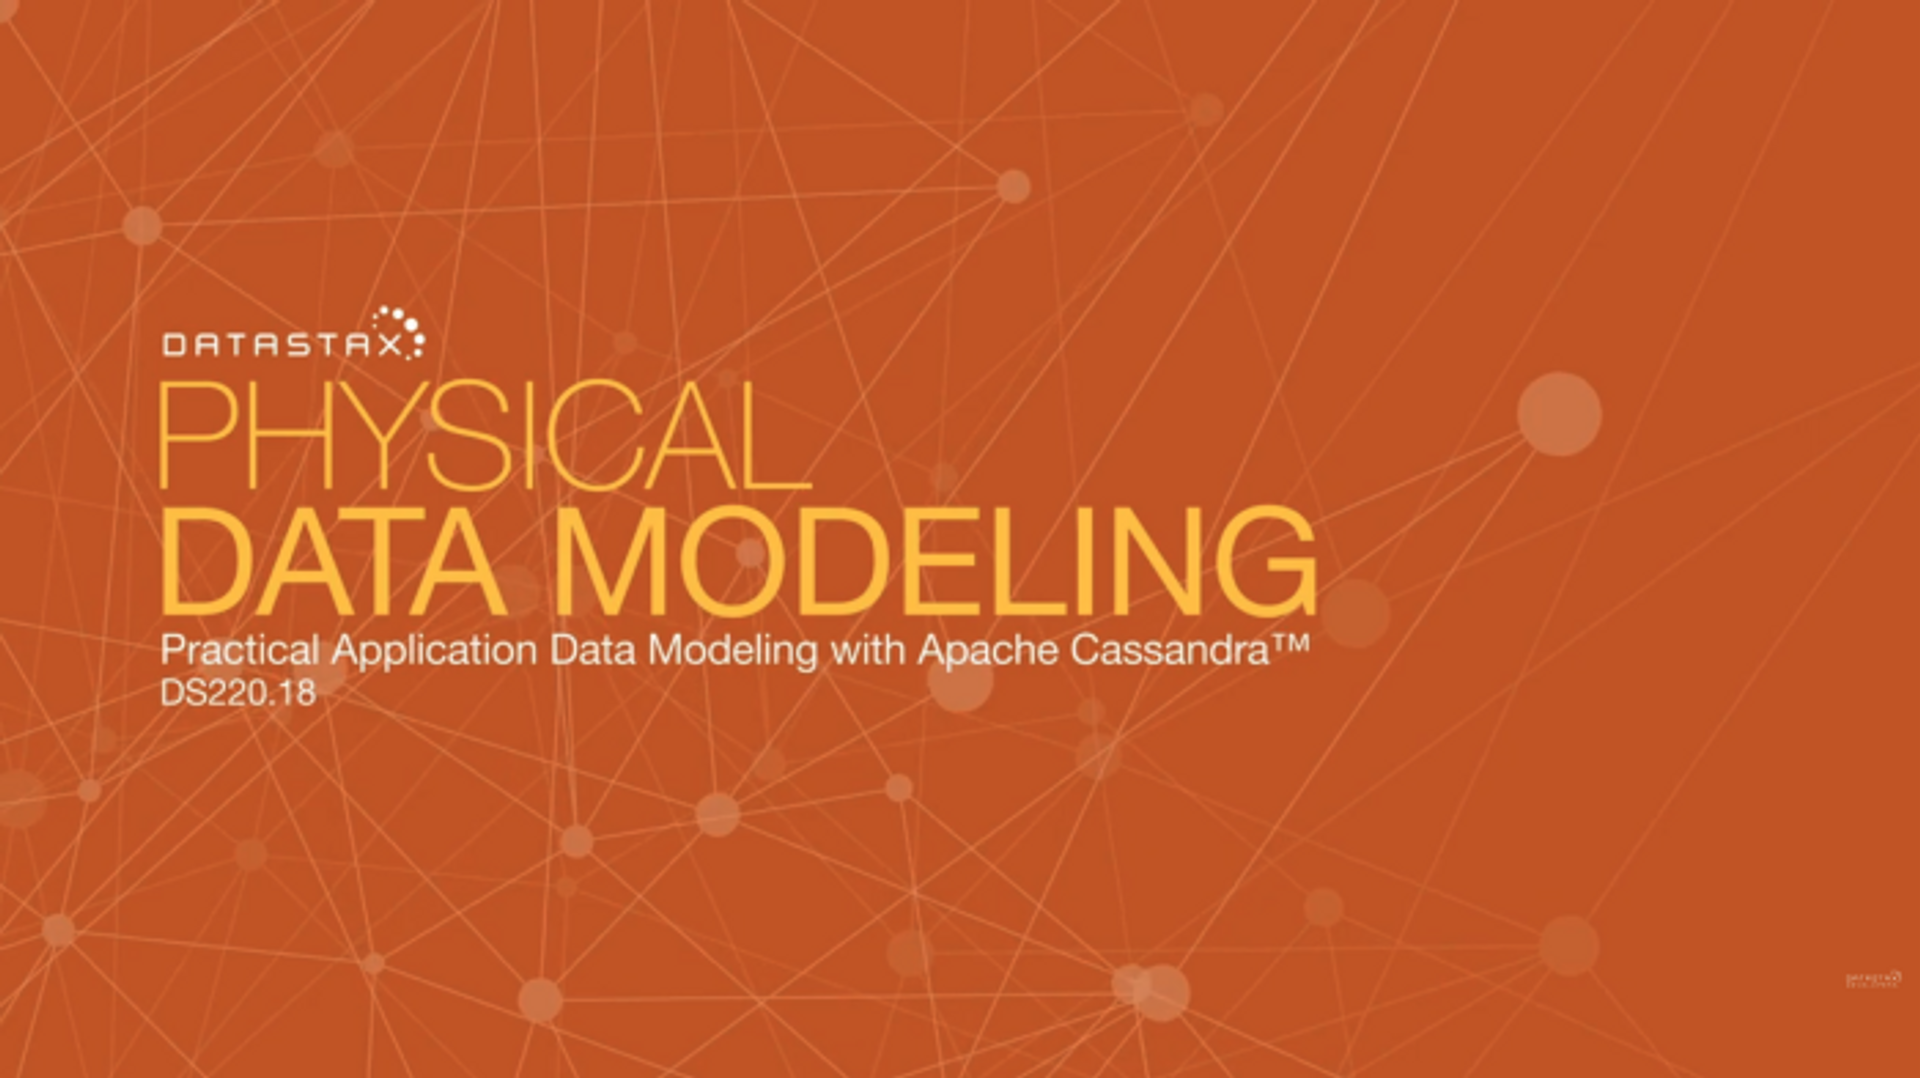 Conceptual Data Modeling